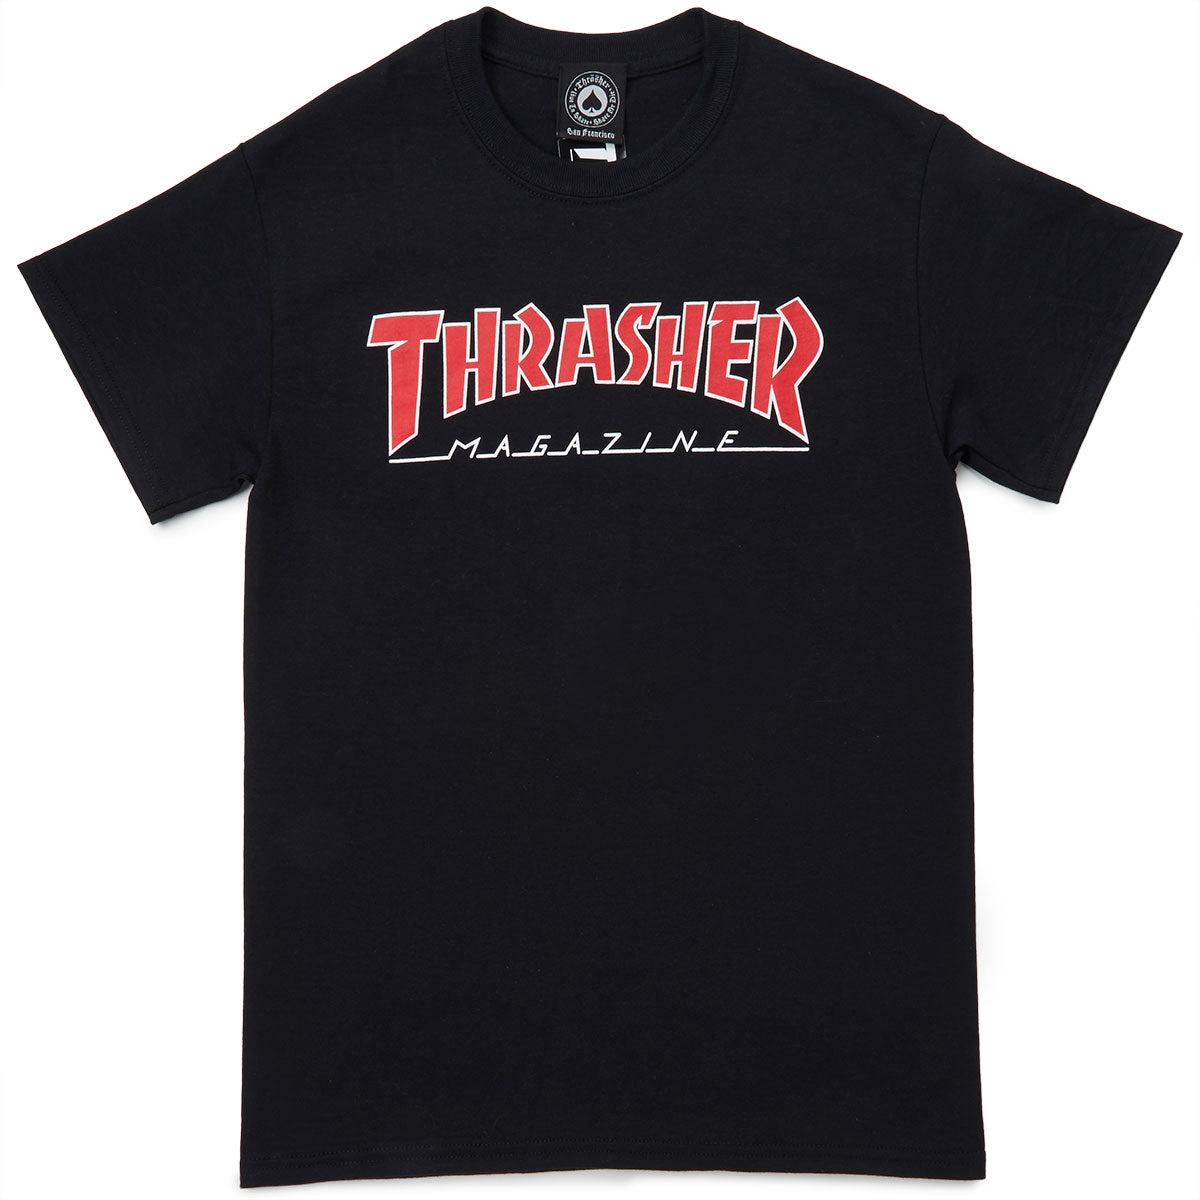 Thrasher Outlined T-Shirt - Black image 1